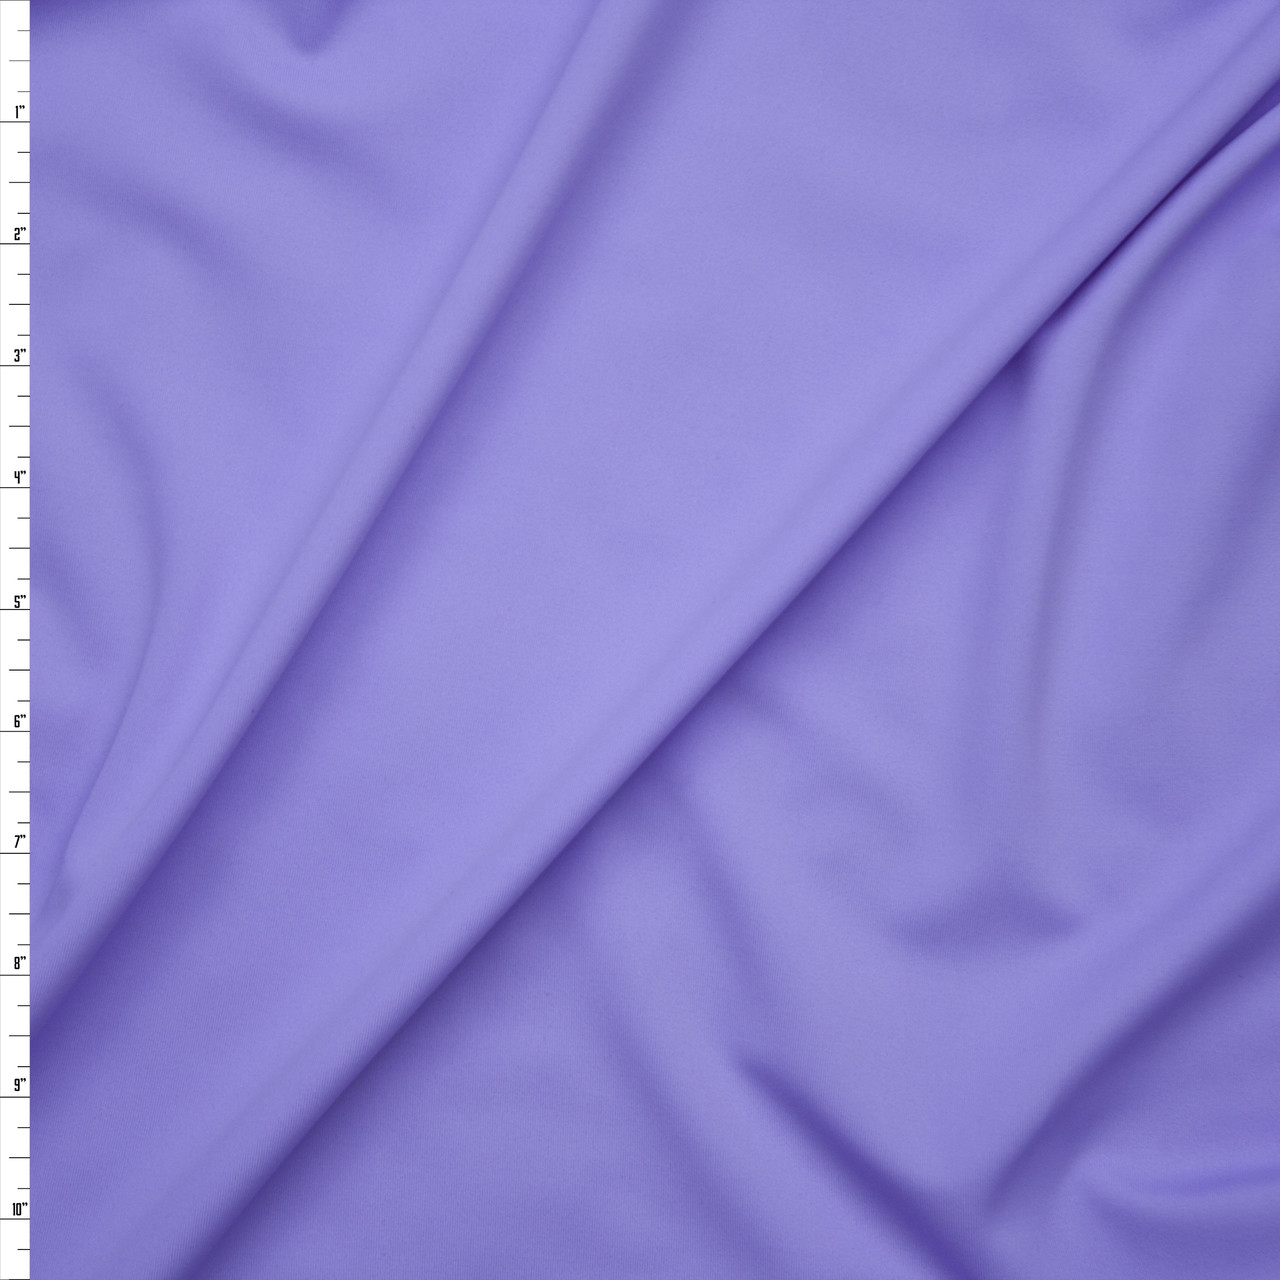 Nylon fabric with hydrophobic treatment, purple